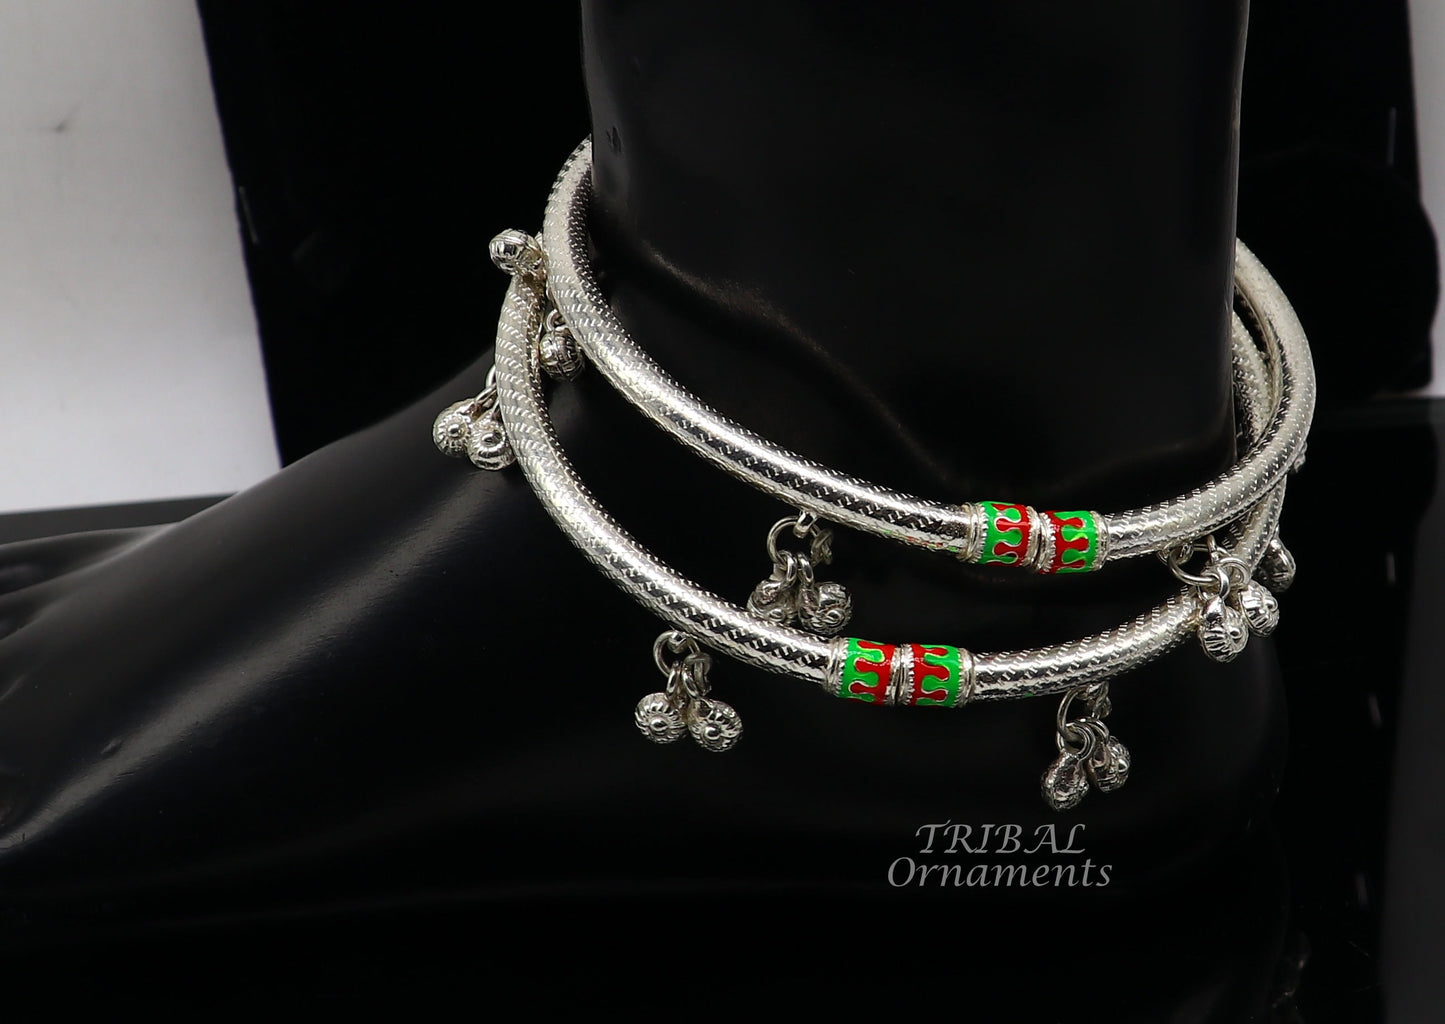 925 Sterling silver Handmade Indian traditional women's charming noisy jingling bells foot kada ankle kada bracelet tribal jewelry nsfk91 - TRIBAL ORNAMENTS